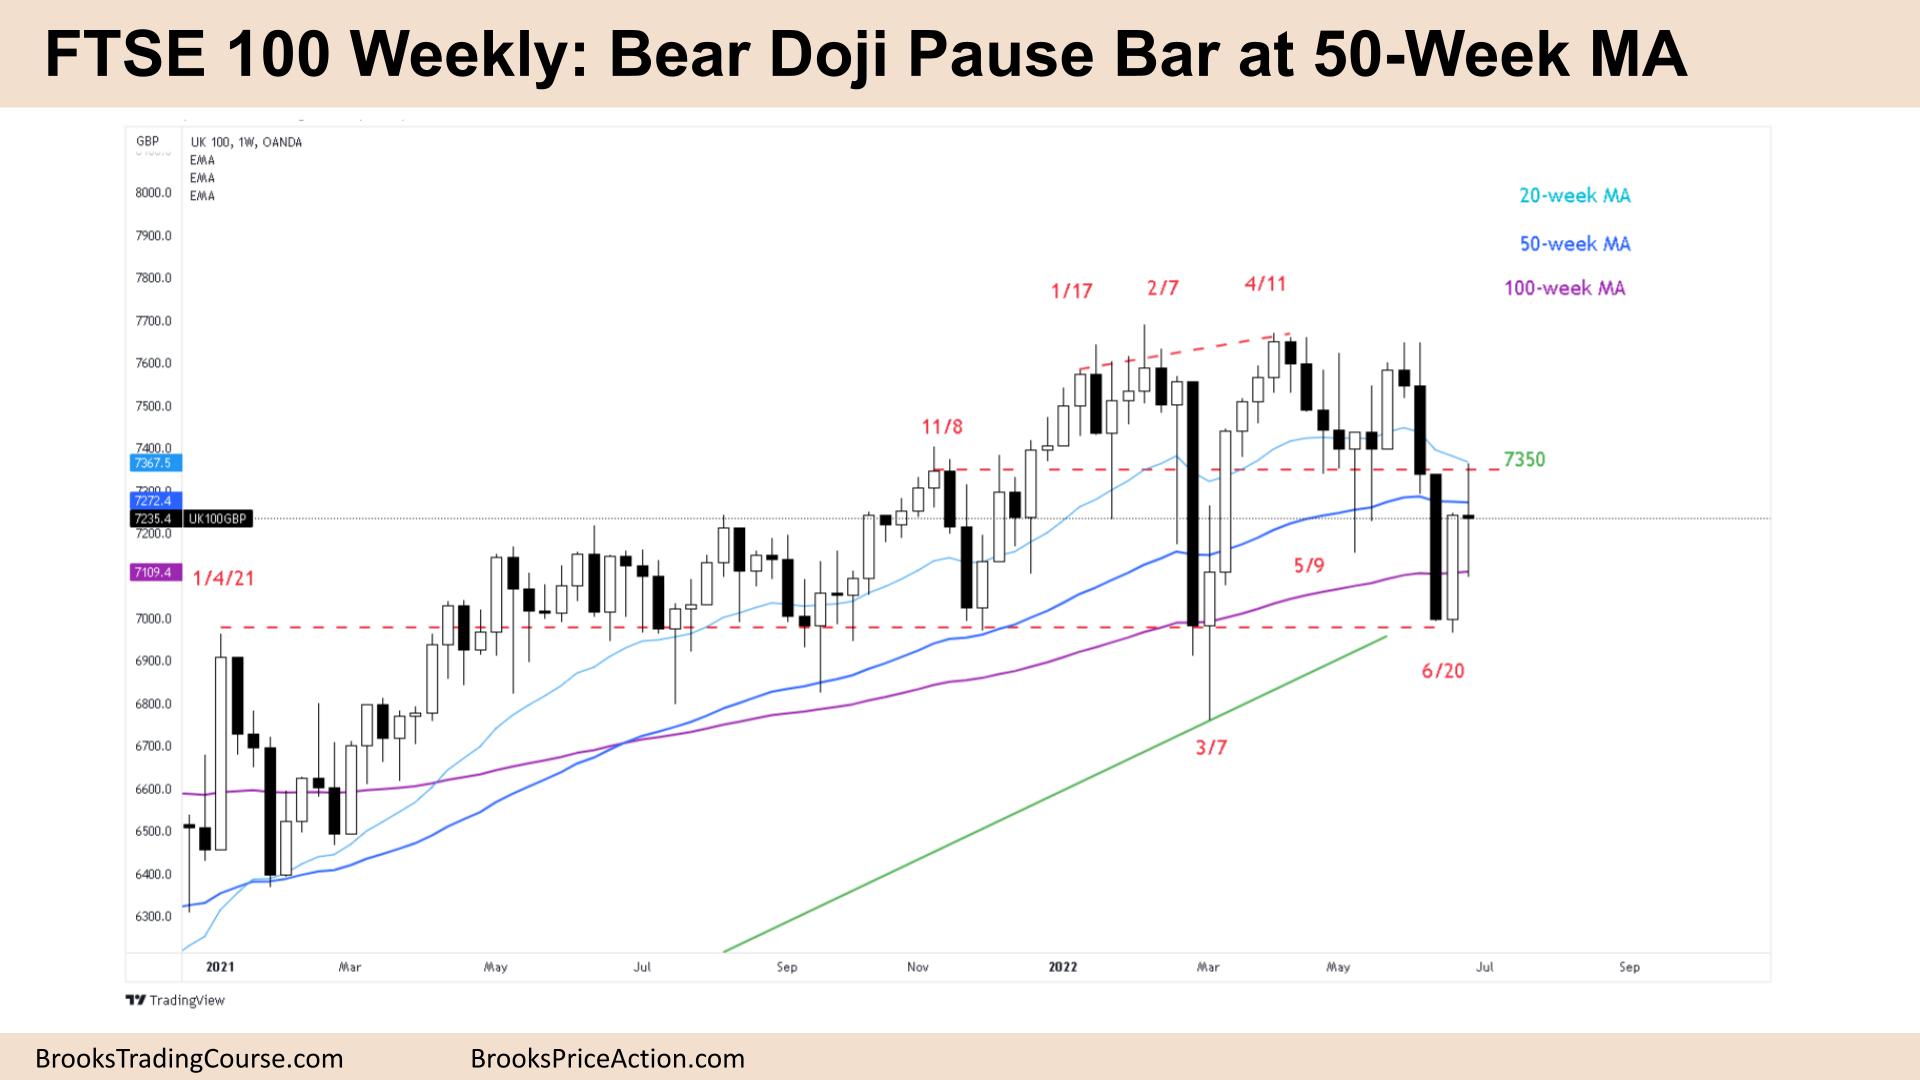 FTSE 100 Bear Doji Pause Bar at 50-Week MA